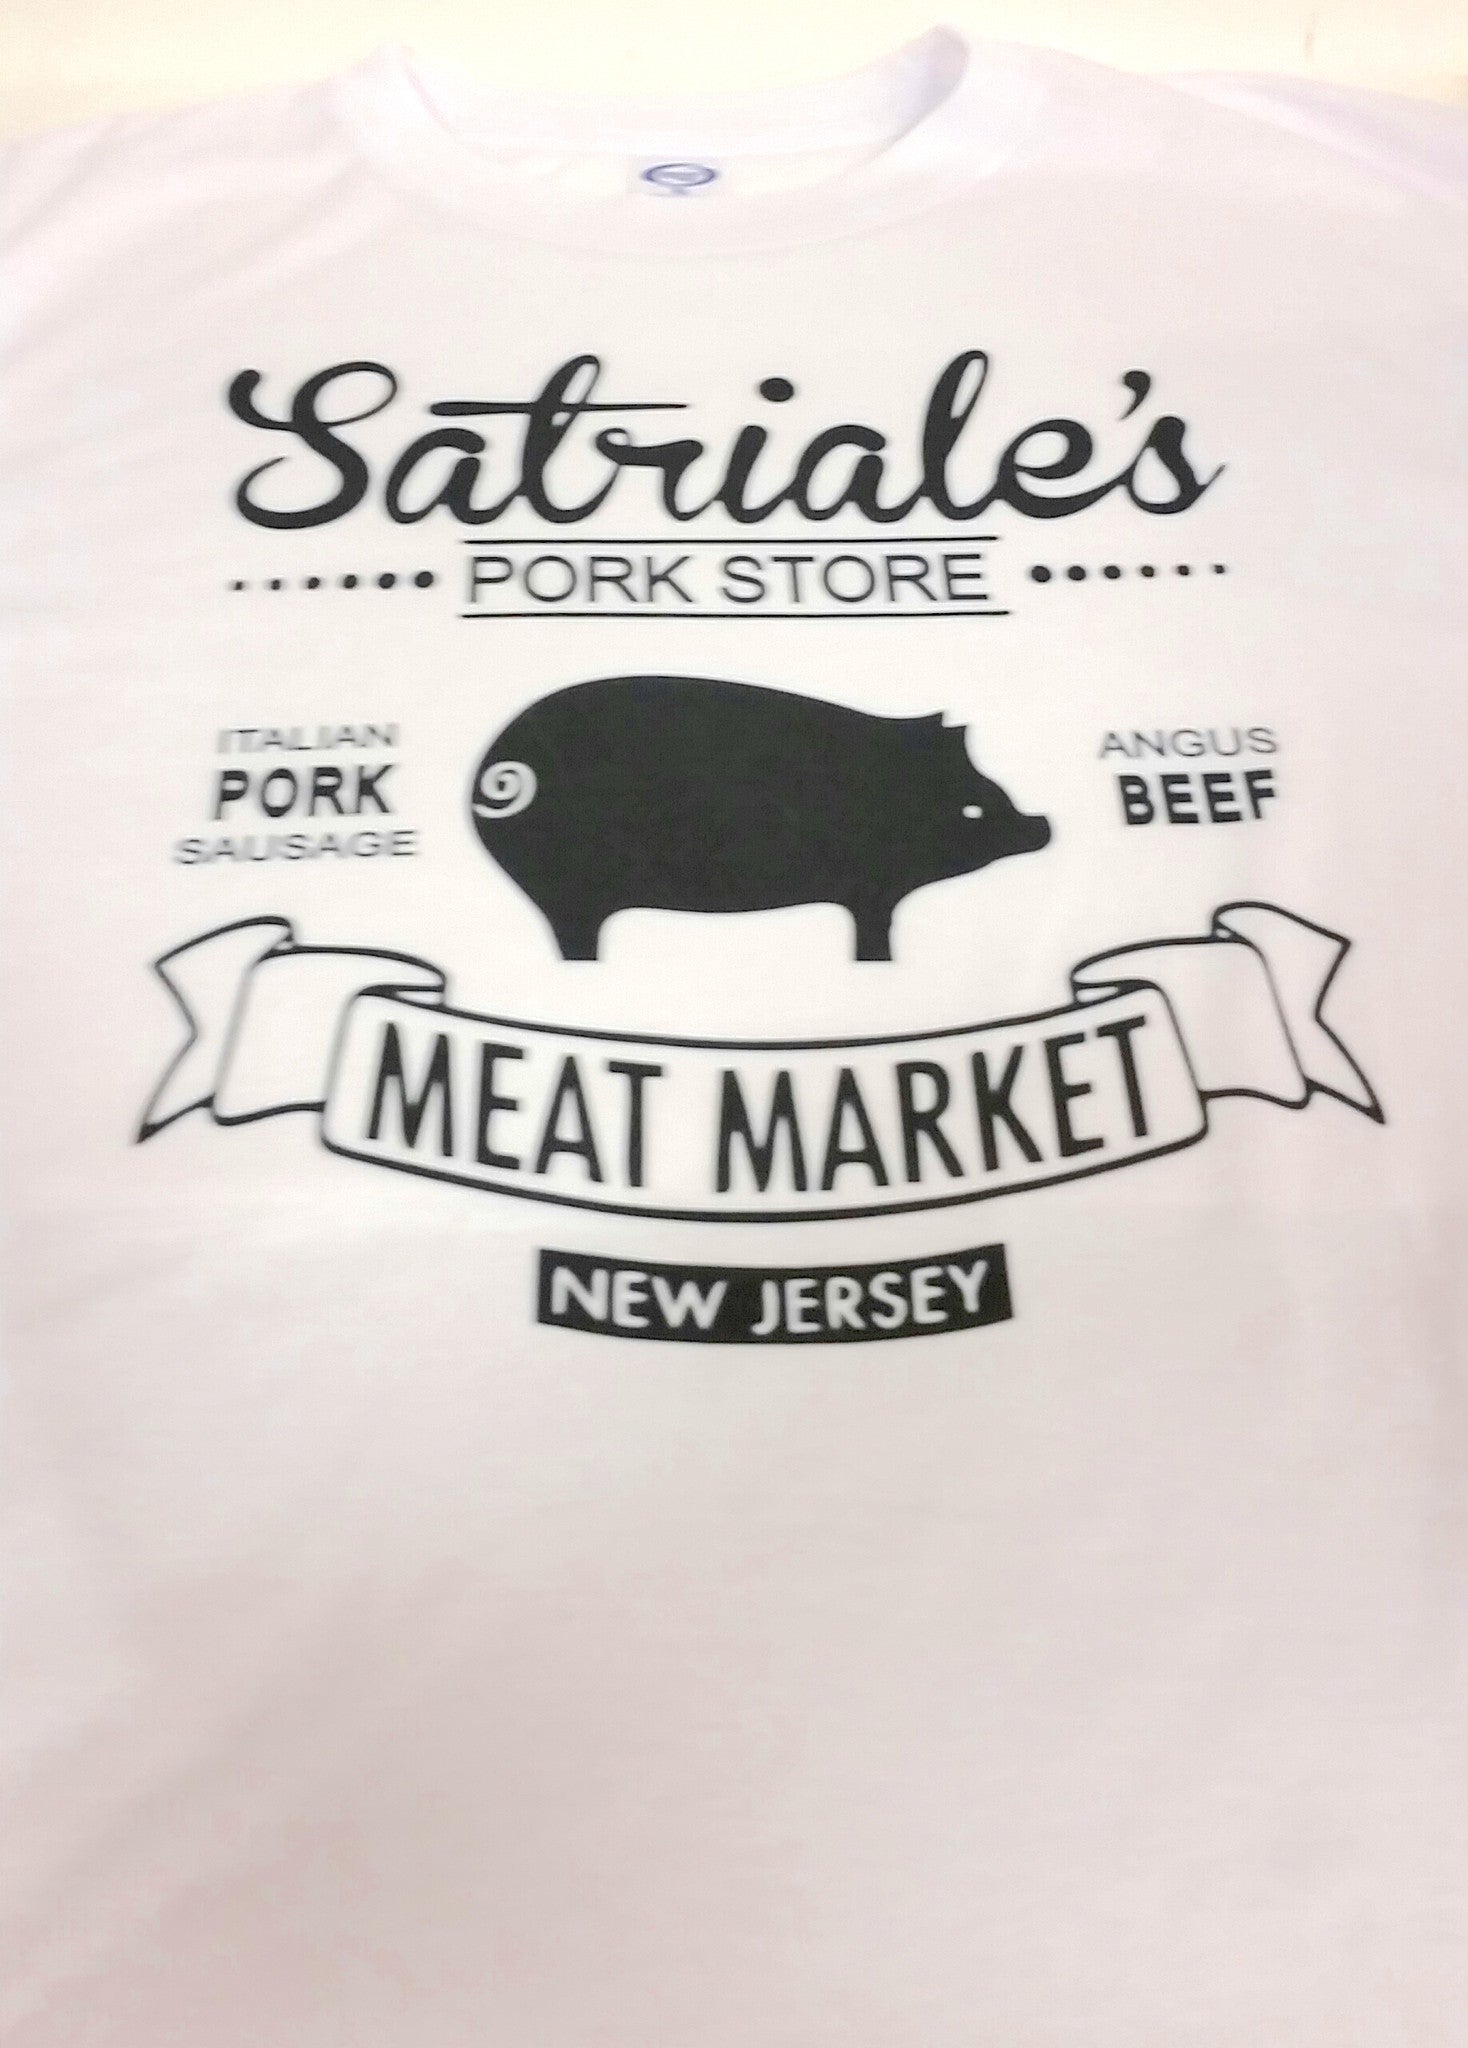 Soprano's "Satriale's Meat Market" T-Shirt